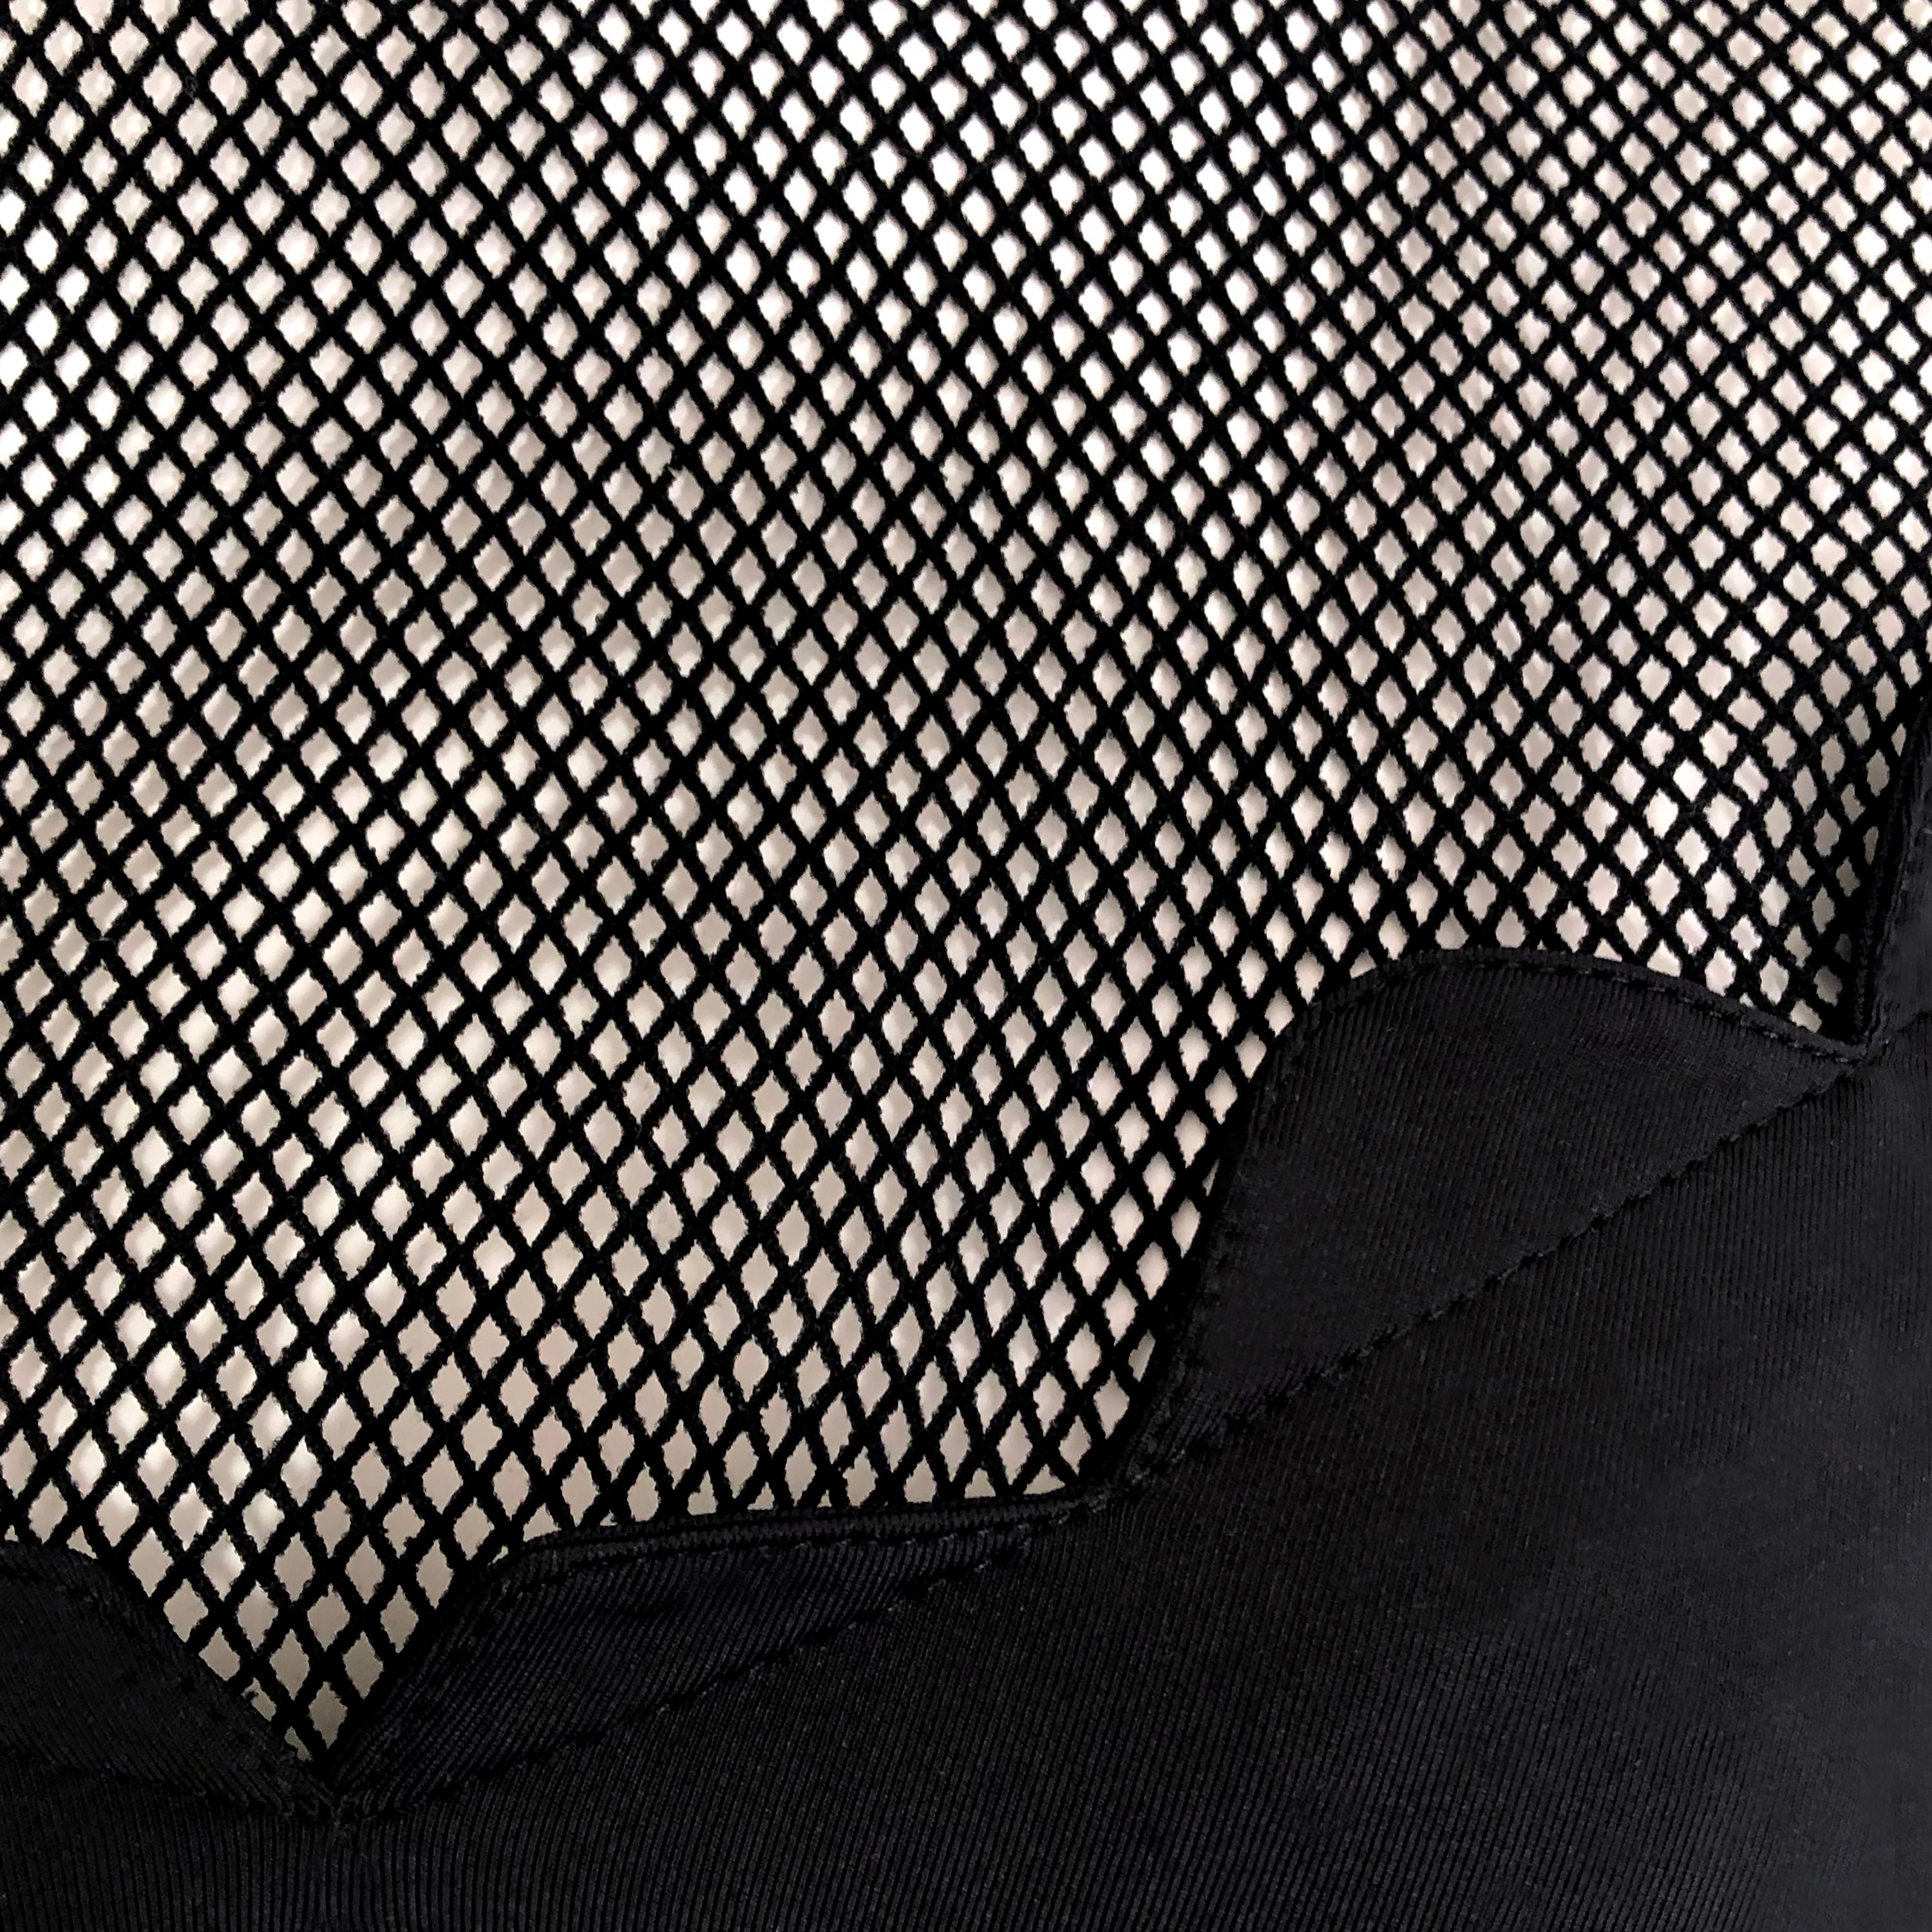 Thierry Mugler Dress - 1980s Vintage - Scalloped Hem + Stretch Fishnet Details 3